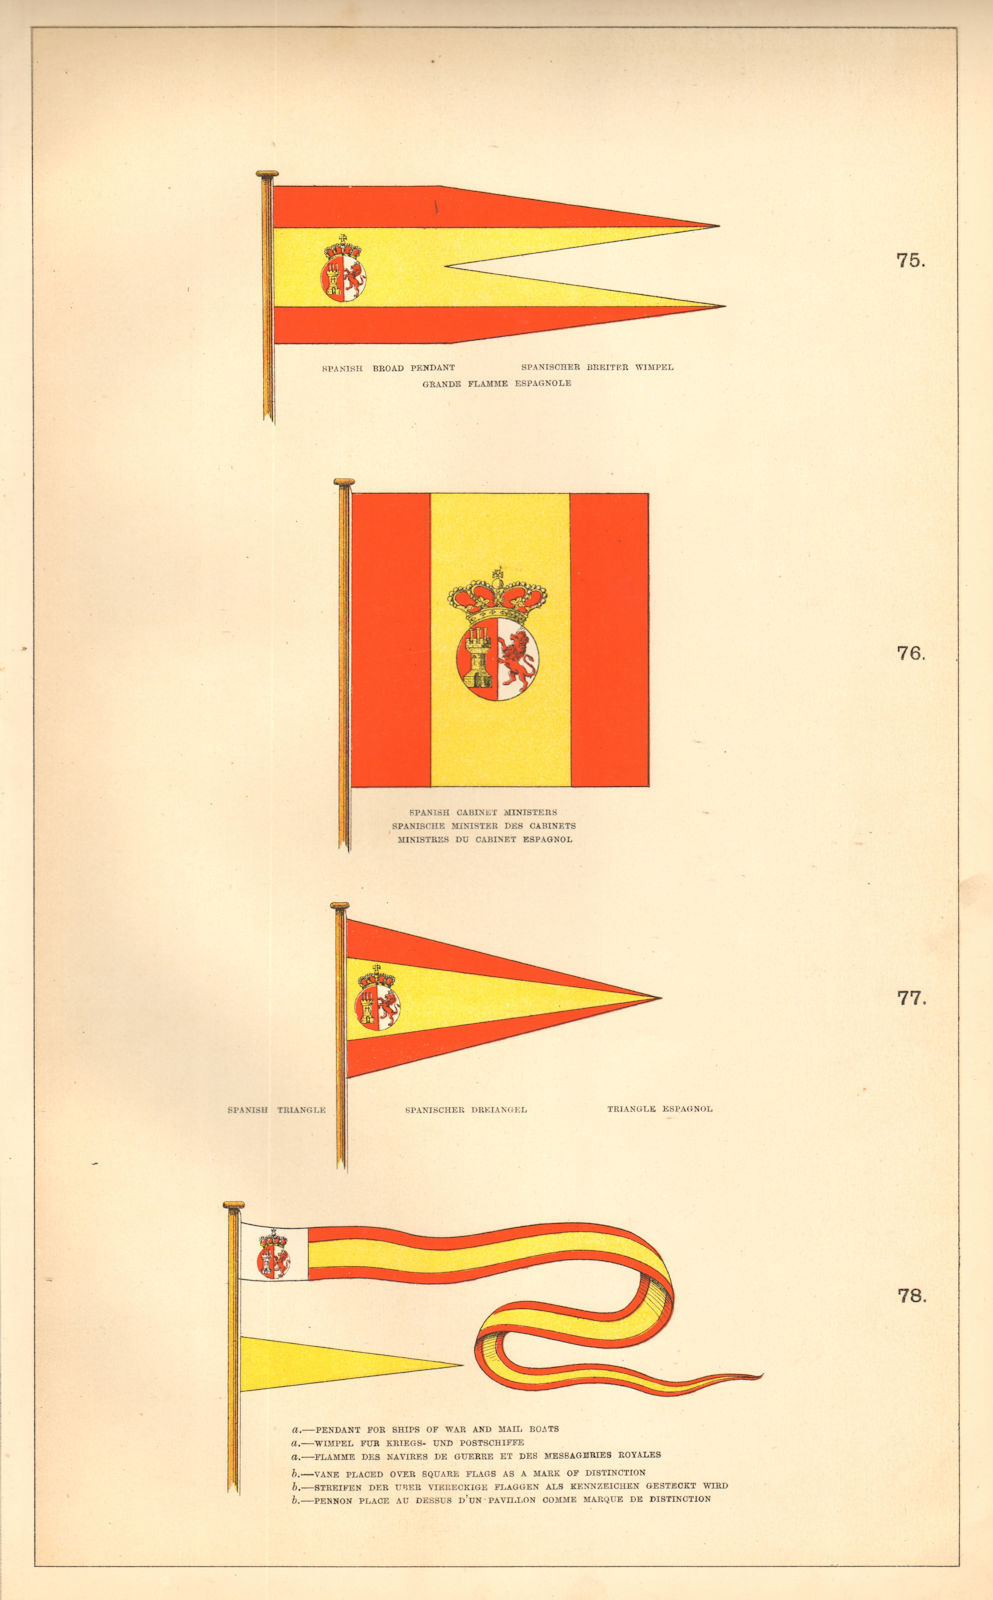 69. Spanish Flag of War, Spanische Kriegsflagge, Pavillon de Guerre  Espagnol; 70. Spanish Ensign Indicative of The Presence of The Admiralty On  Board, Spanische Fahne Die Die Gegenwart Der Admiralitat An Bord